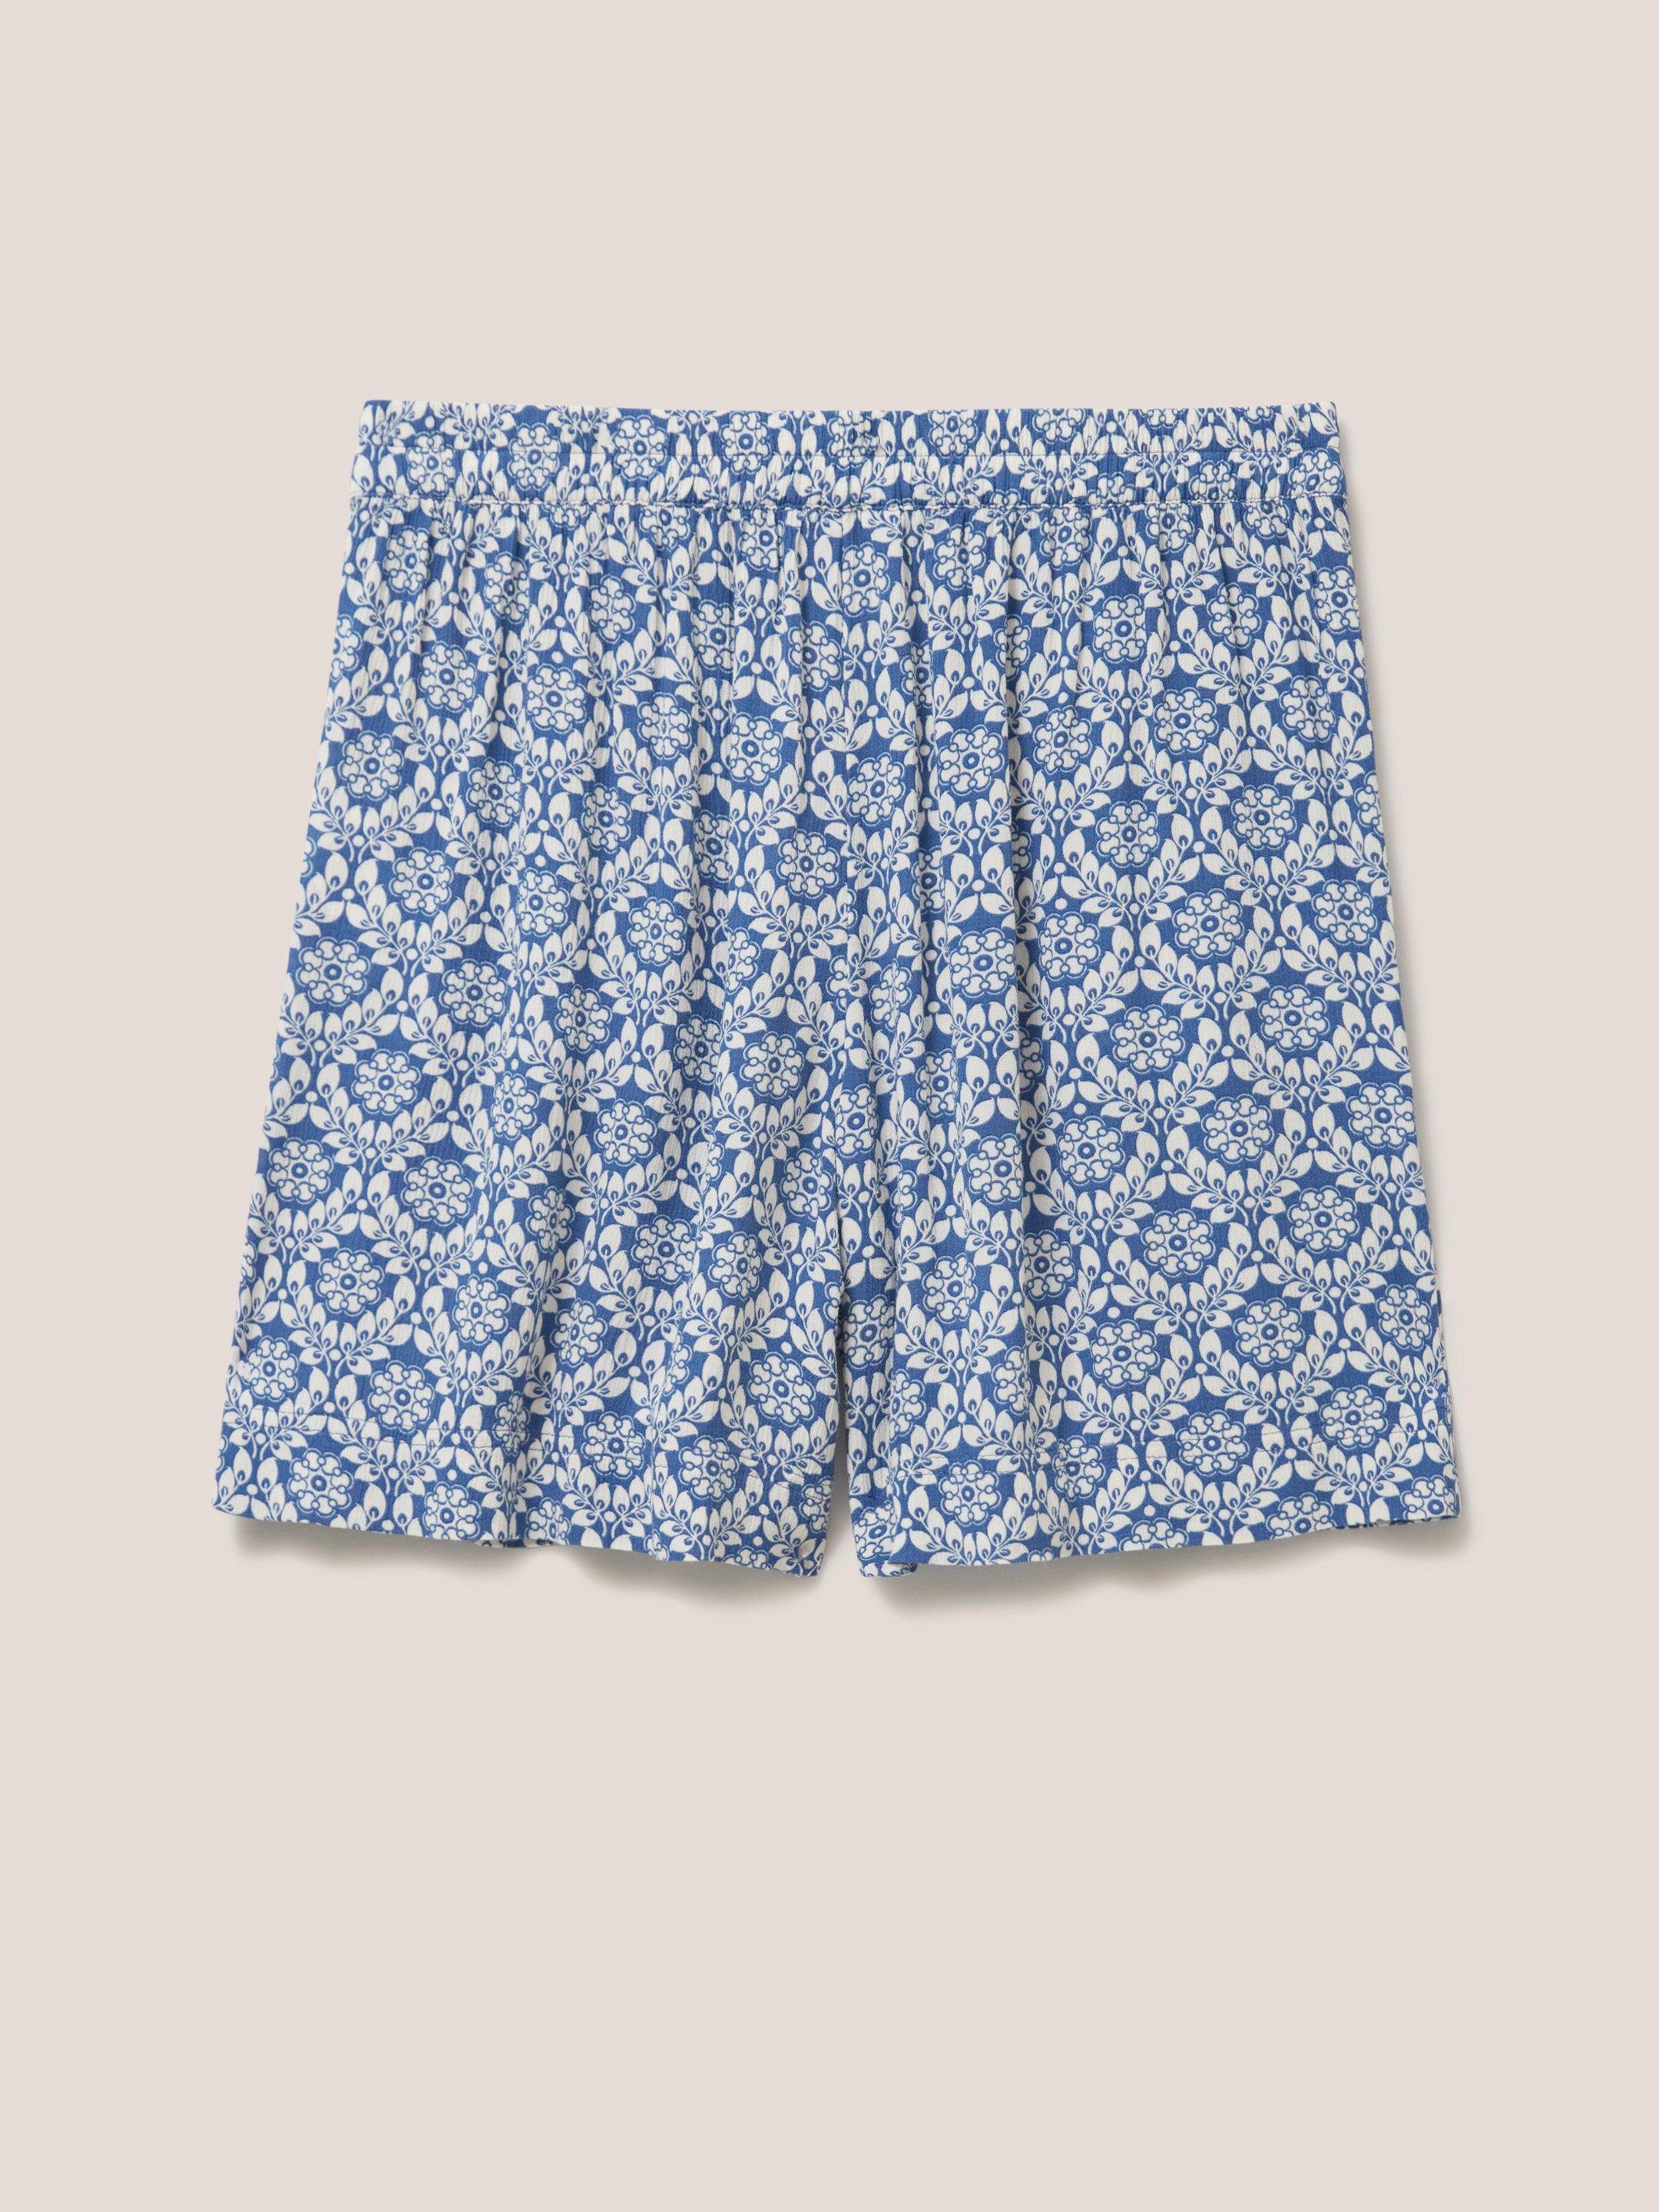 Matilda Crinkle Shorts in BLUE MLT - FLAT BACK